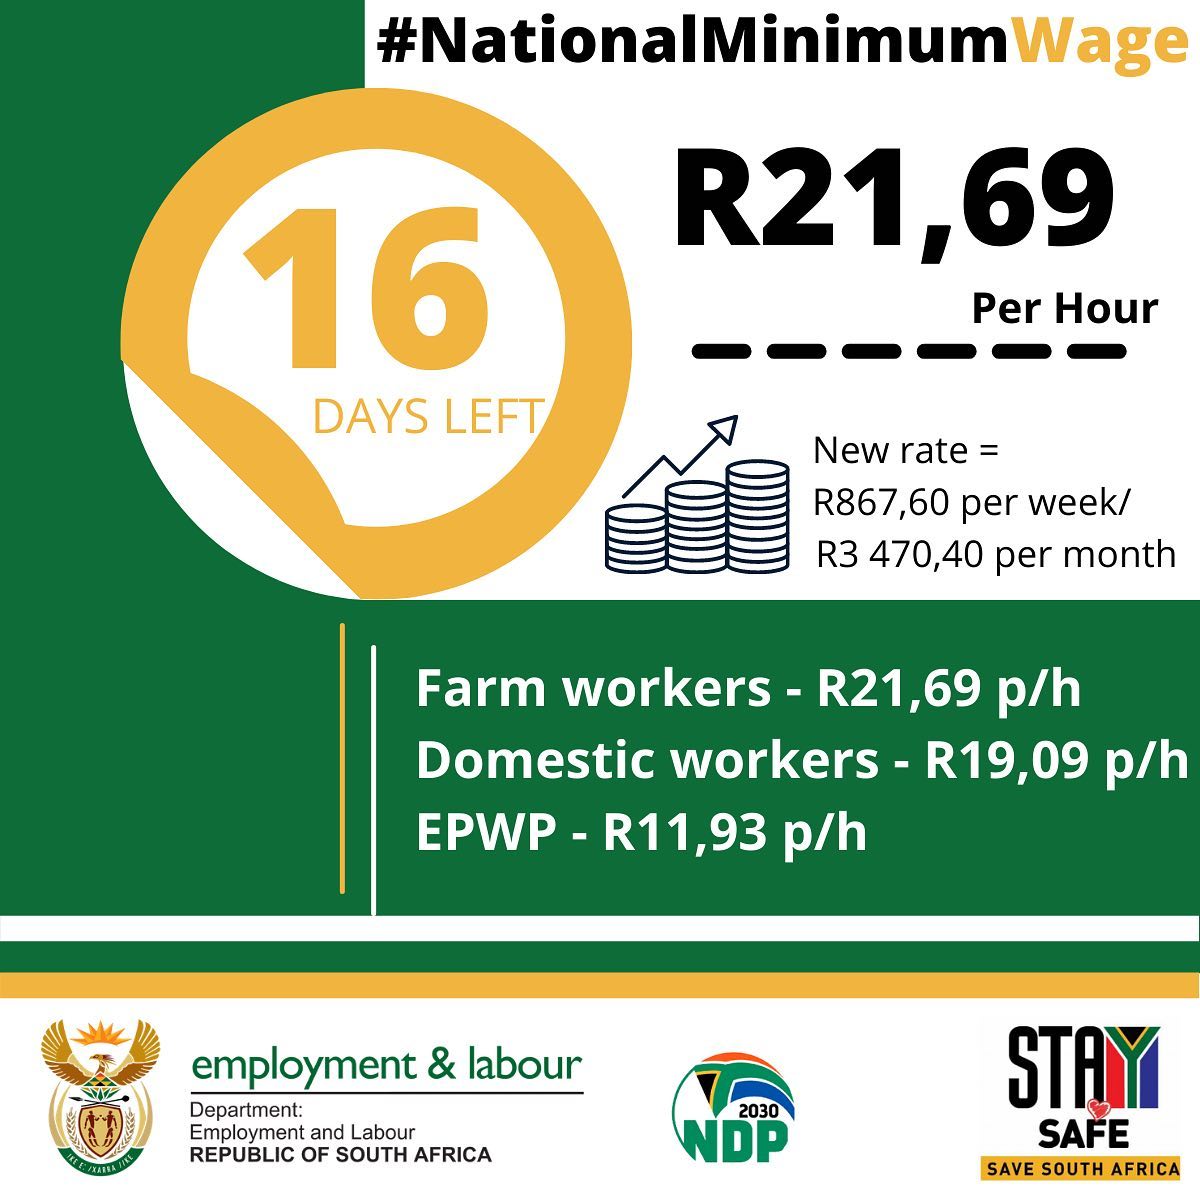 Employment practice living wage University of Johannesburg